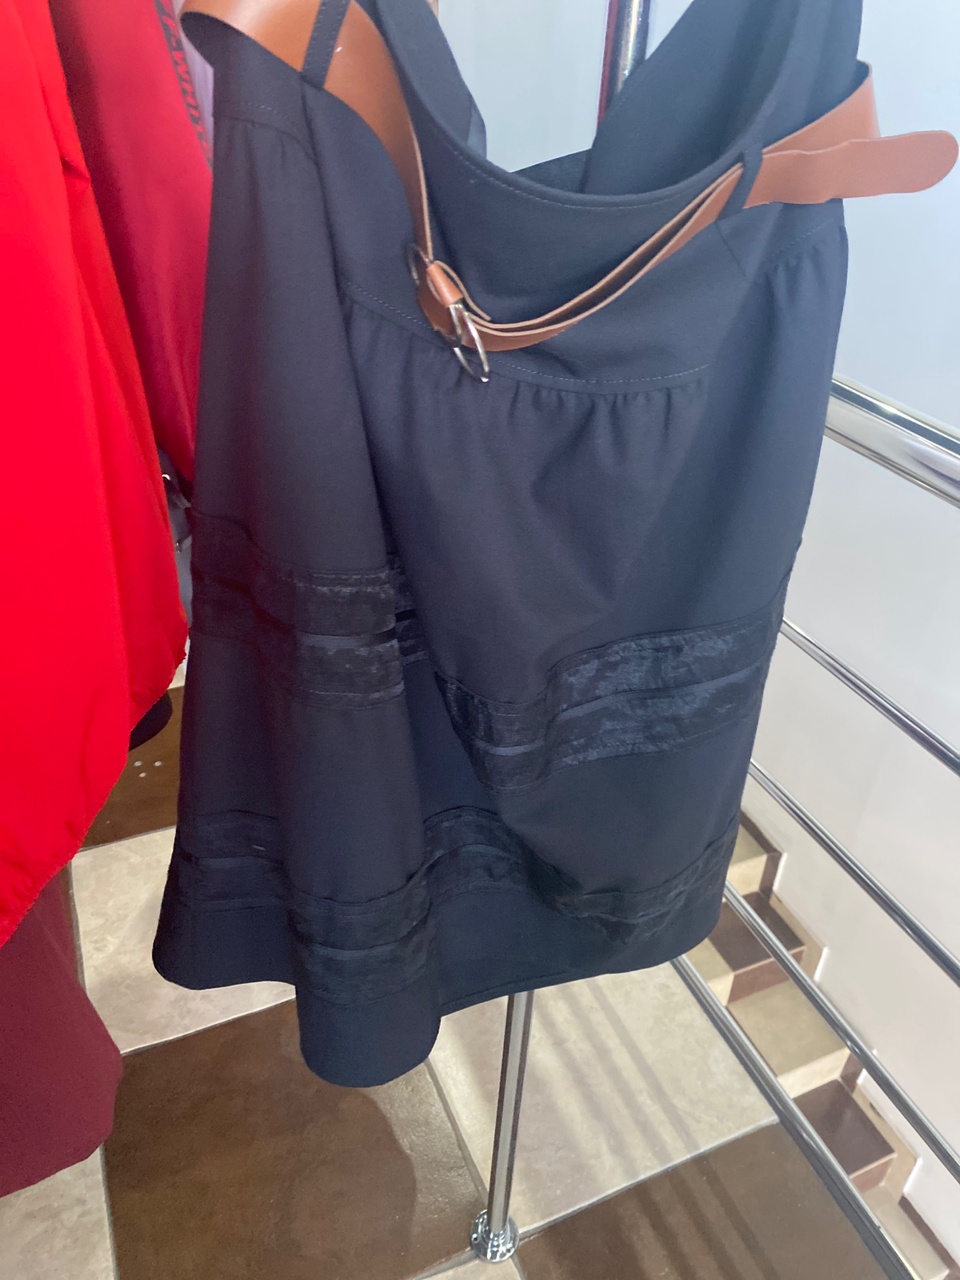 Турецкая юбка - 1 300 ₽, заказать онлайн.